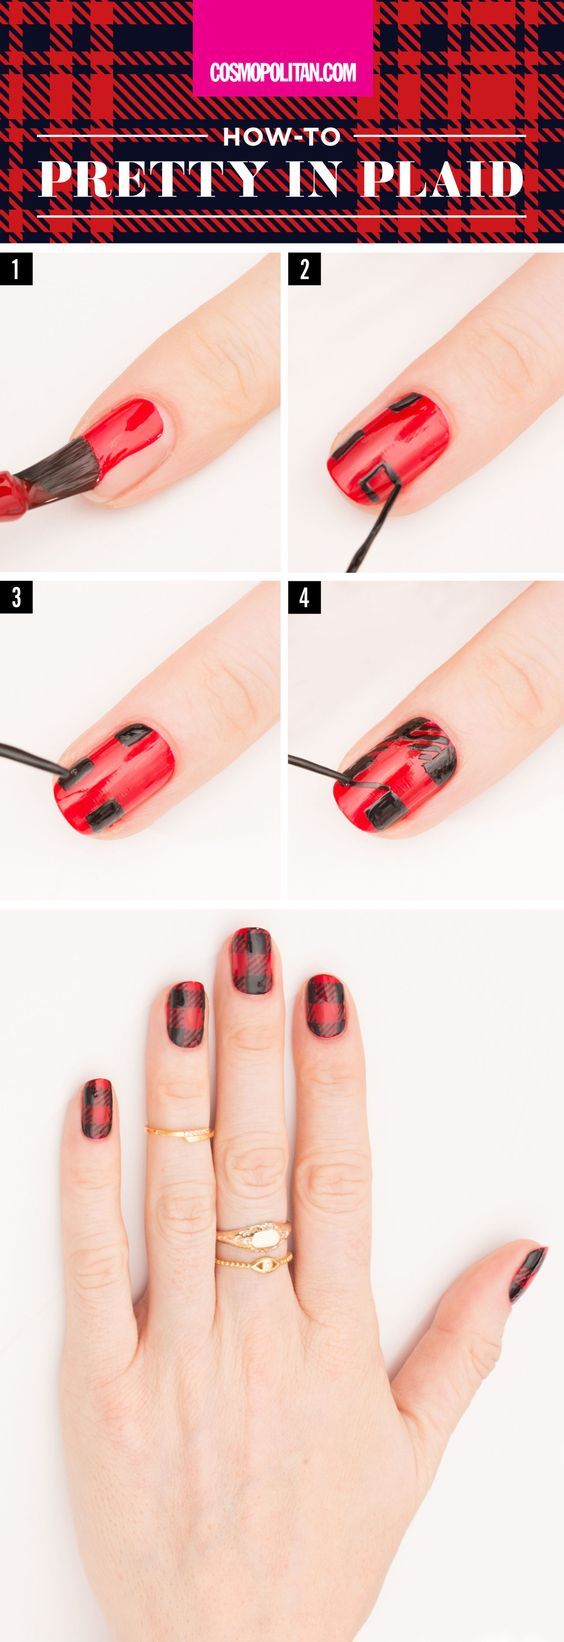 Black and red plaid nail art tutorials